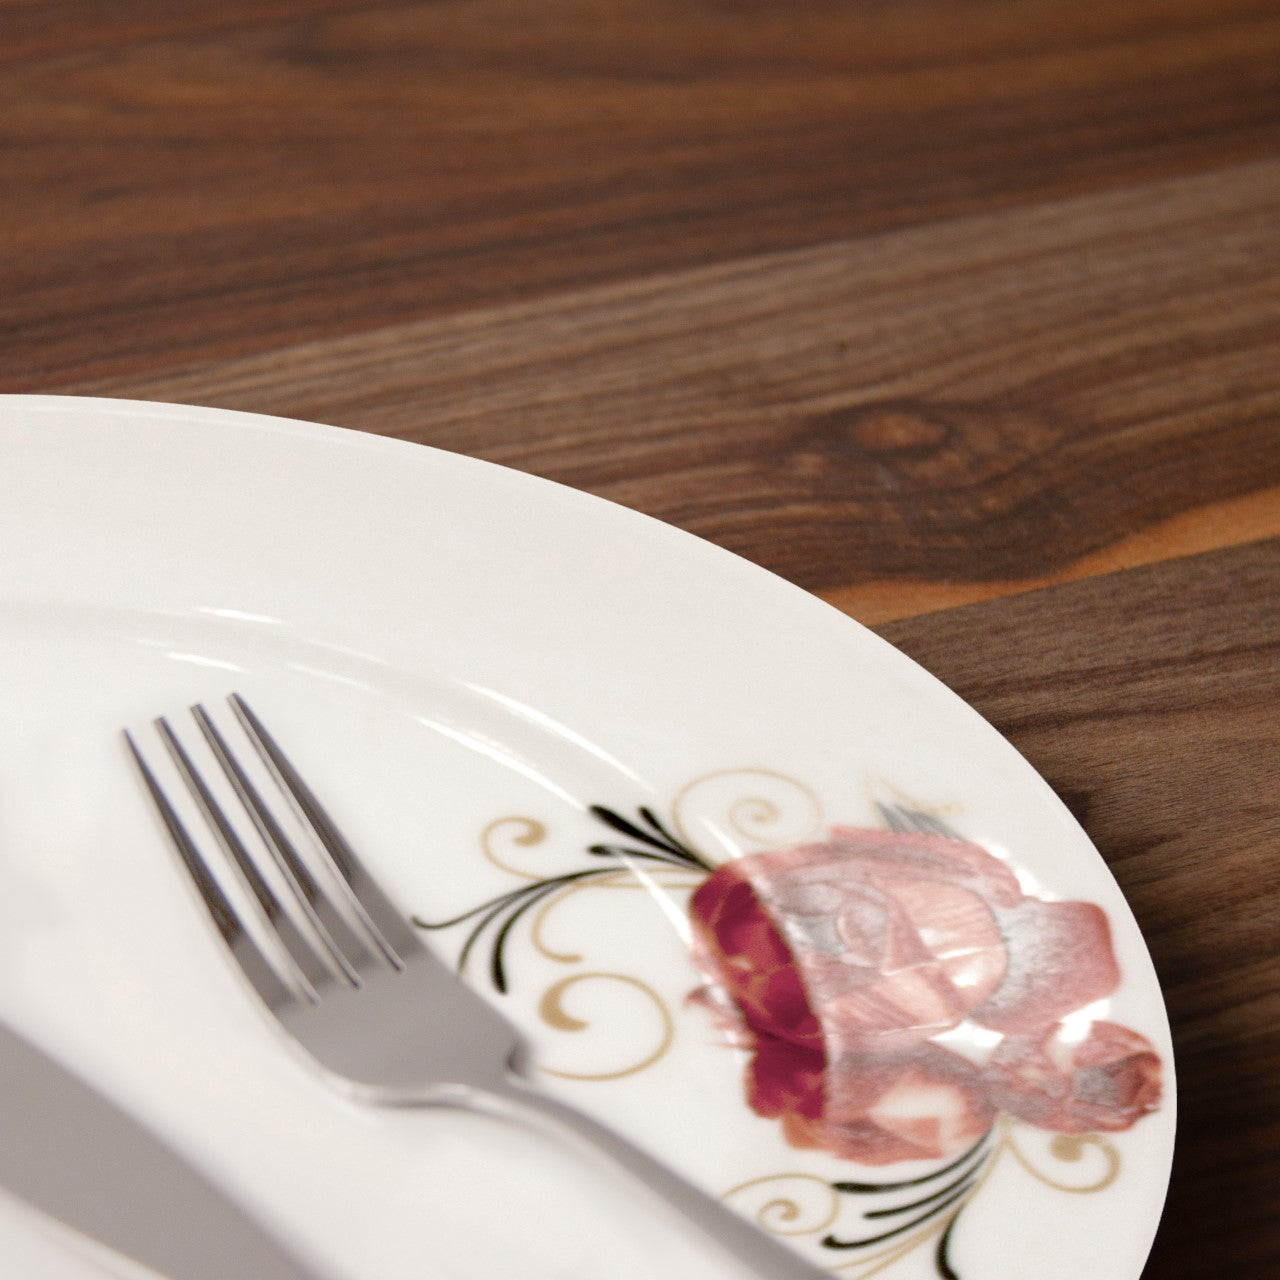 Ceramic Dinner Plate Red Rose 26.5cm 10032 (Parcel Rate)